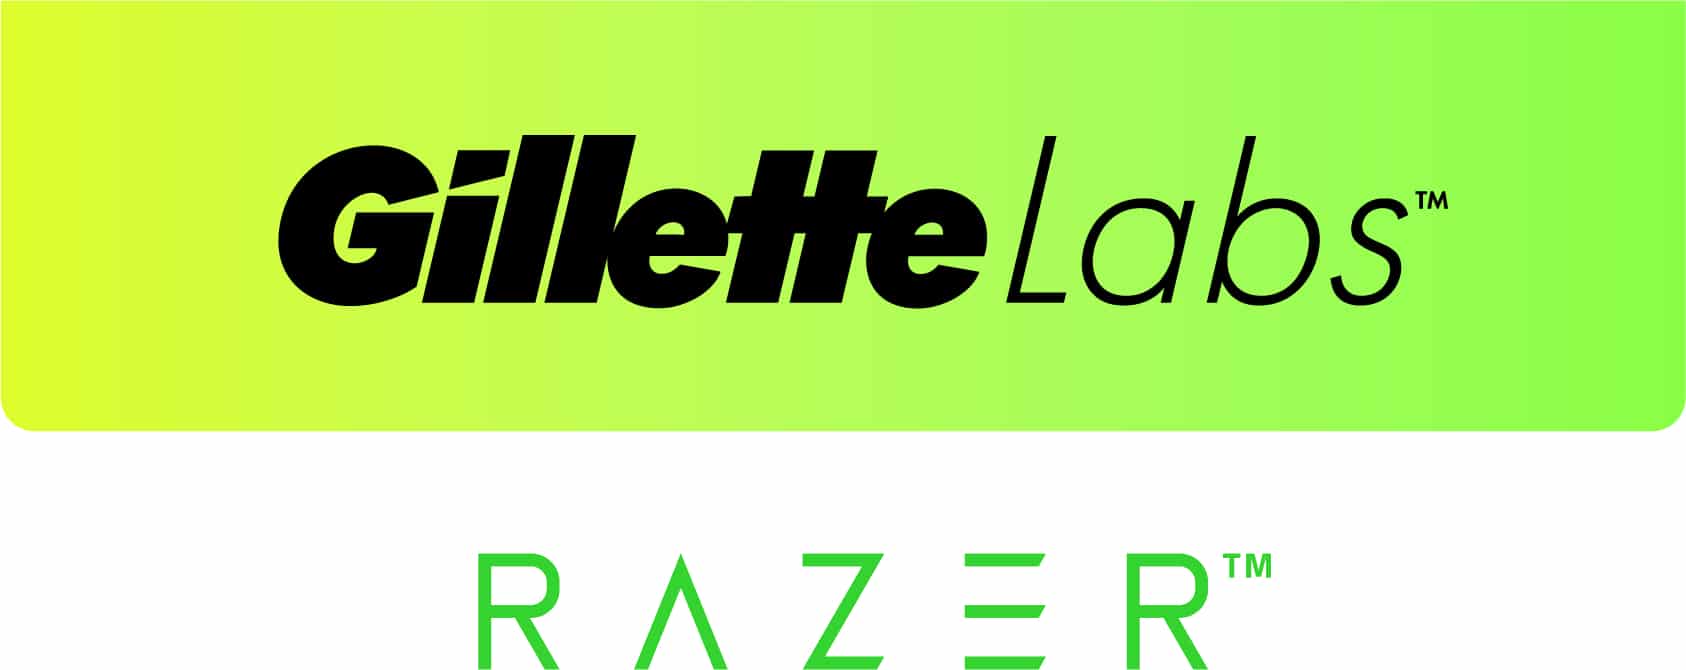 GilletteLabs X Razer limited Edition